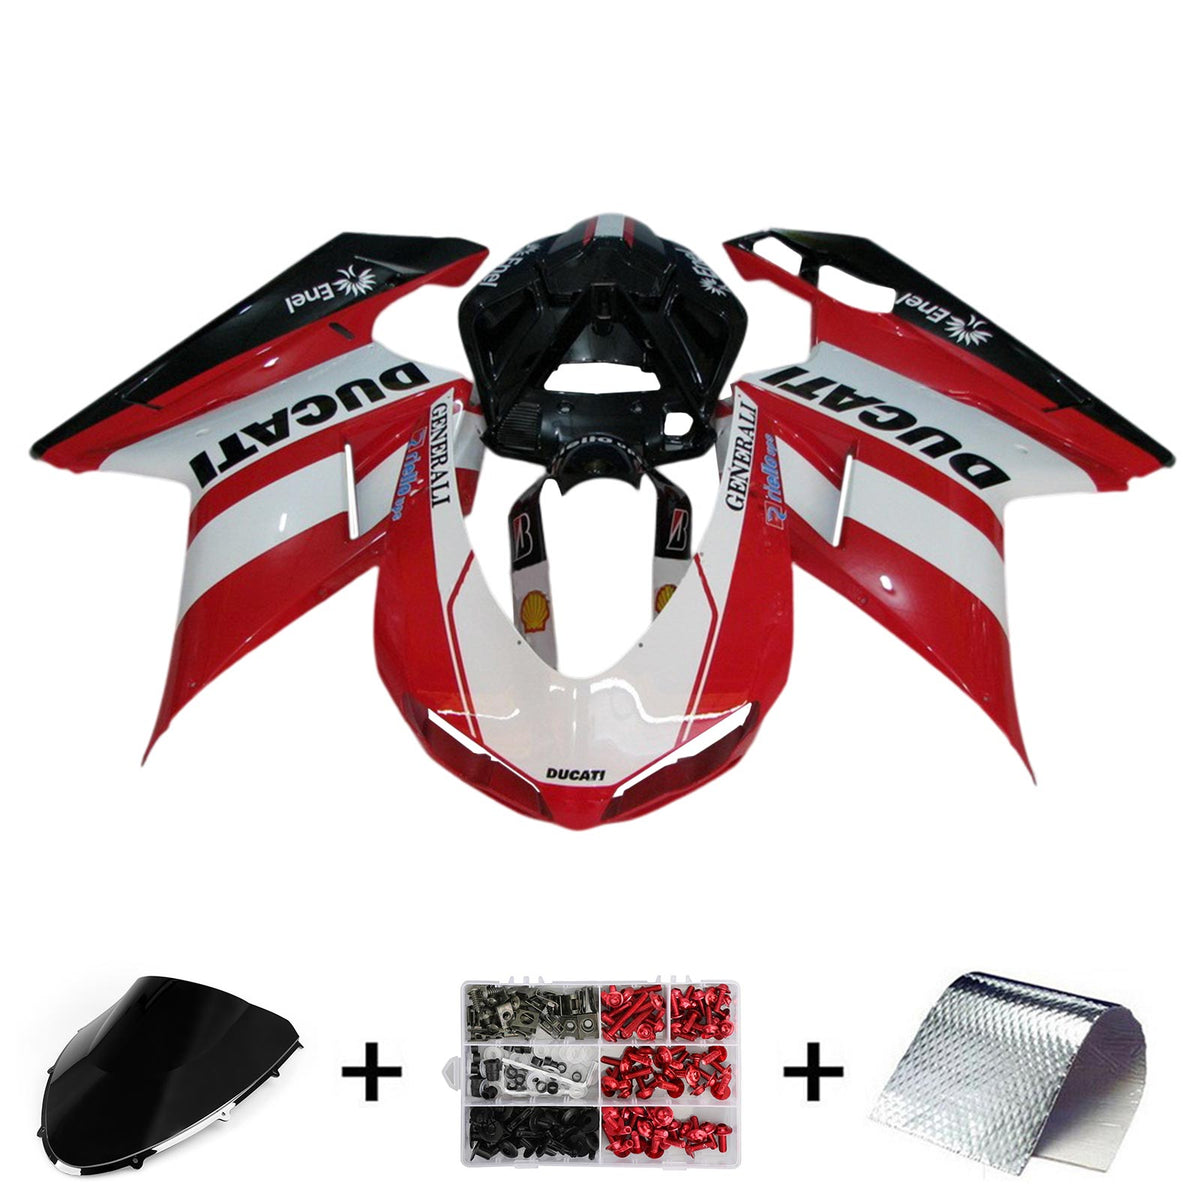 Amotopart 2007-2012 Ducati 1098 1198 848 Red&White Style1 Fairing Kit